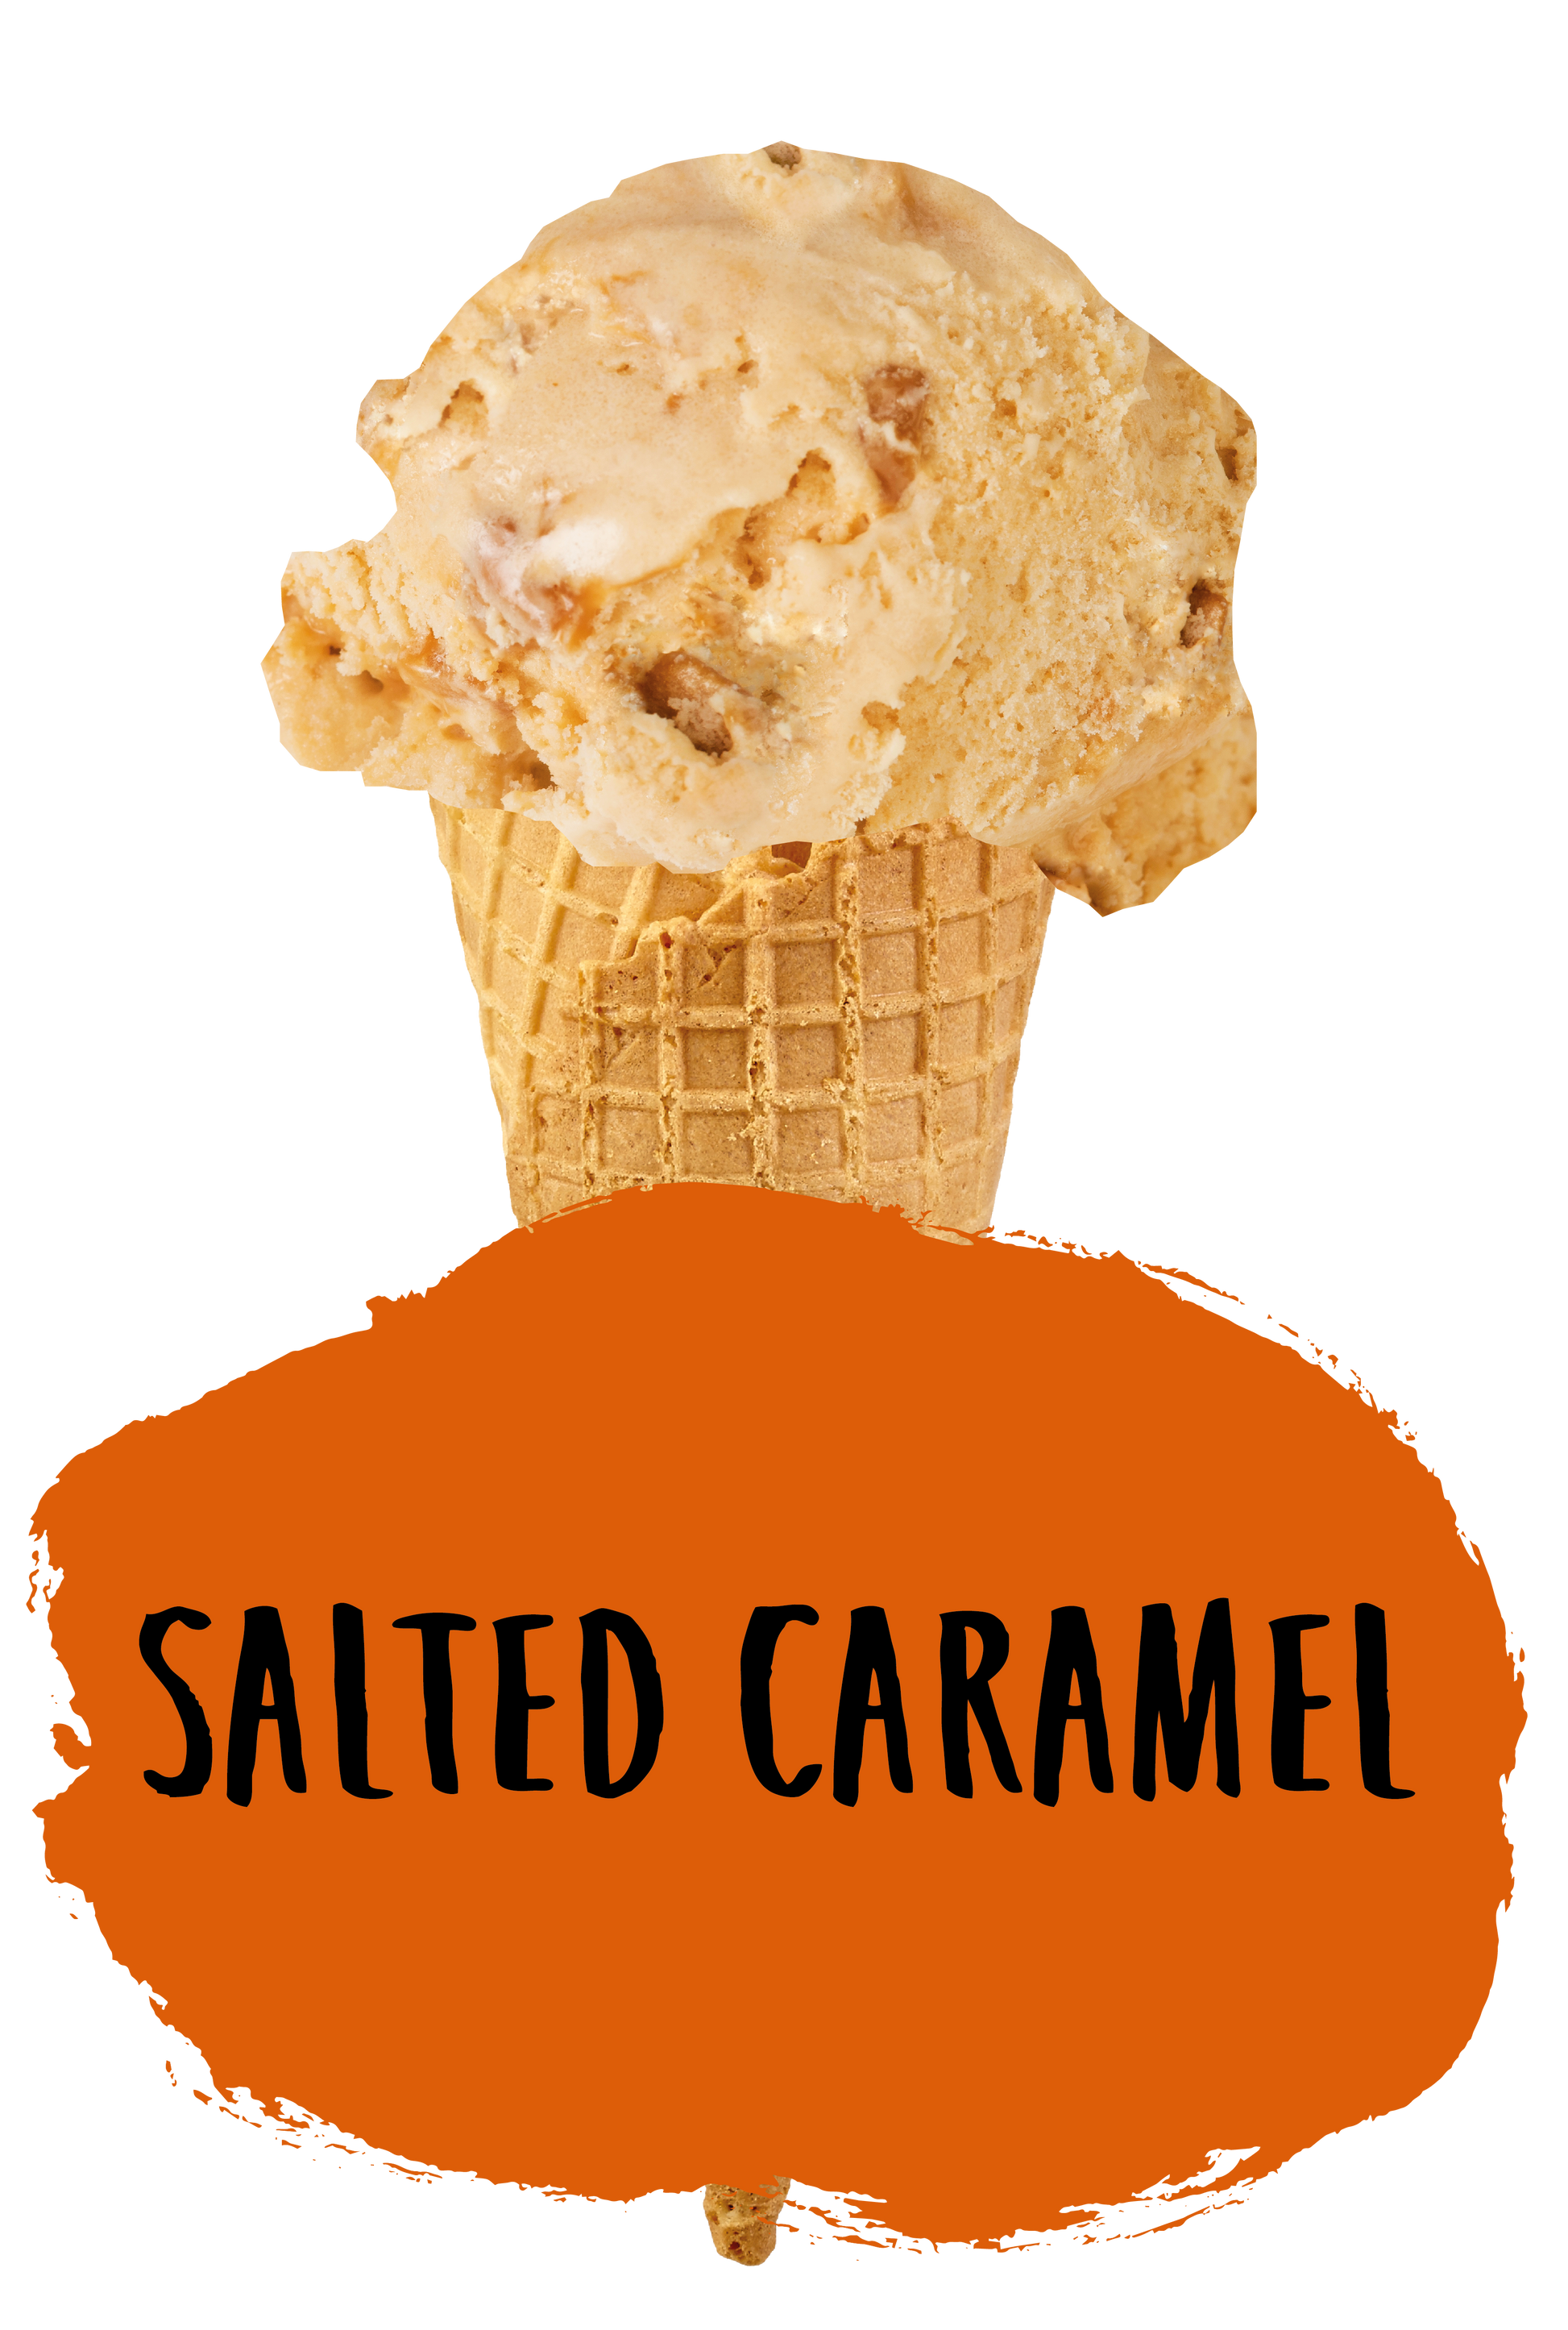 Marshfield Farm Salted Caramel Ice Cream Flavour Cone